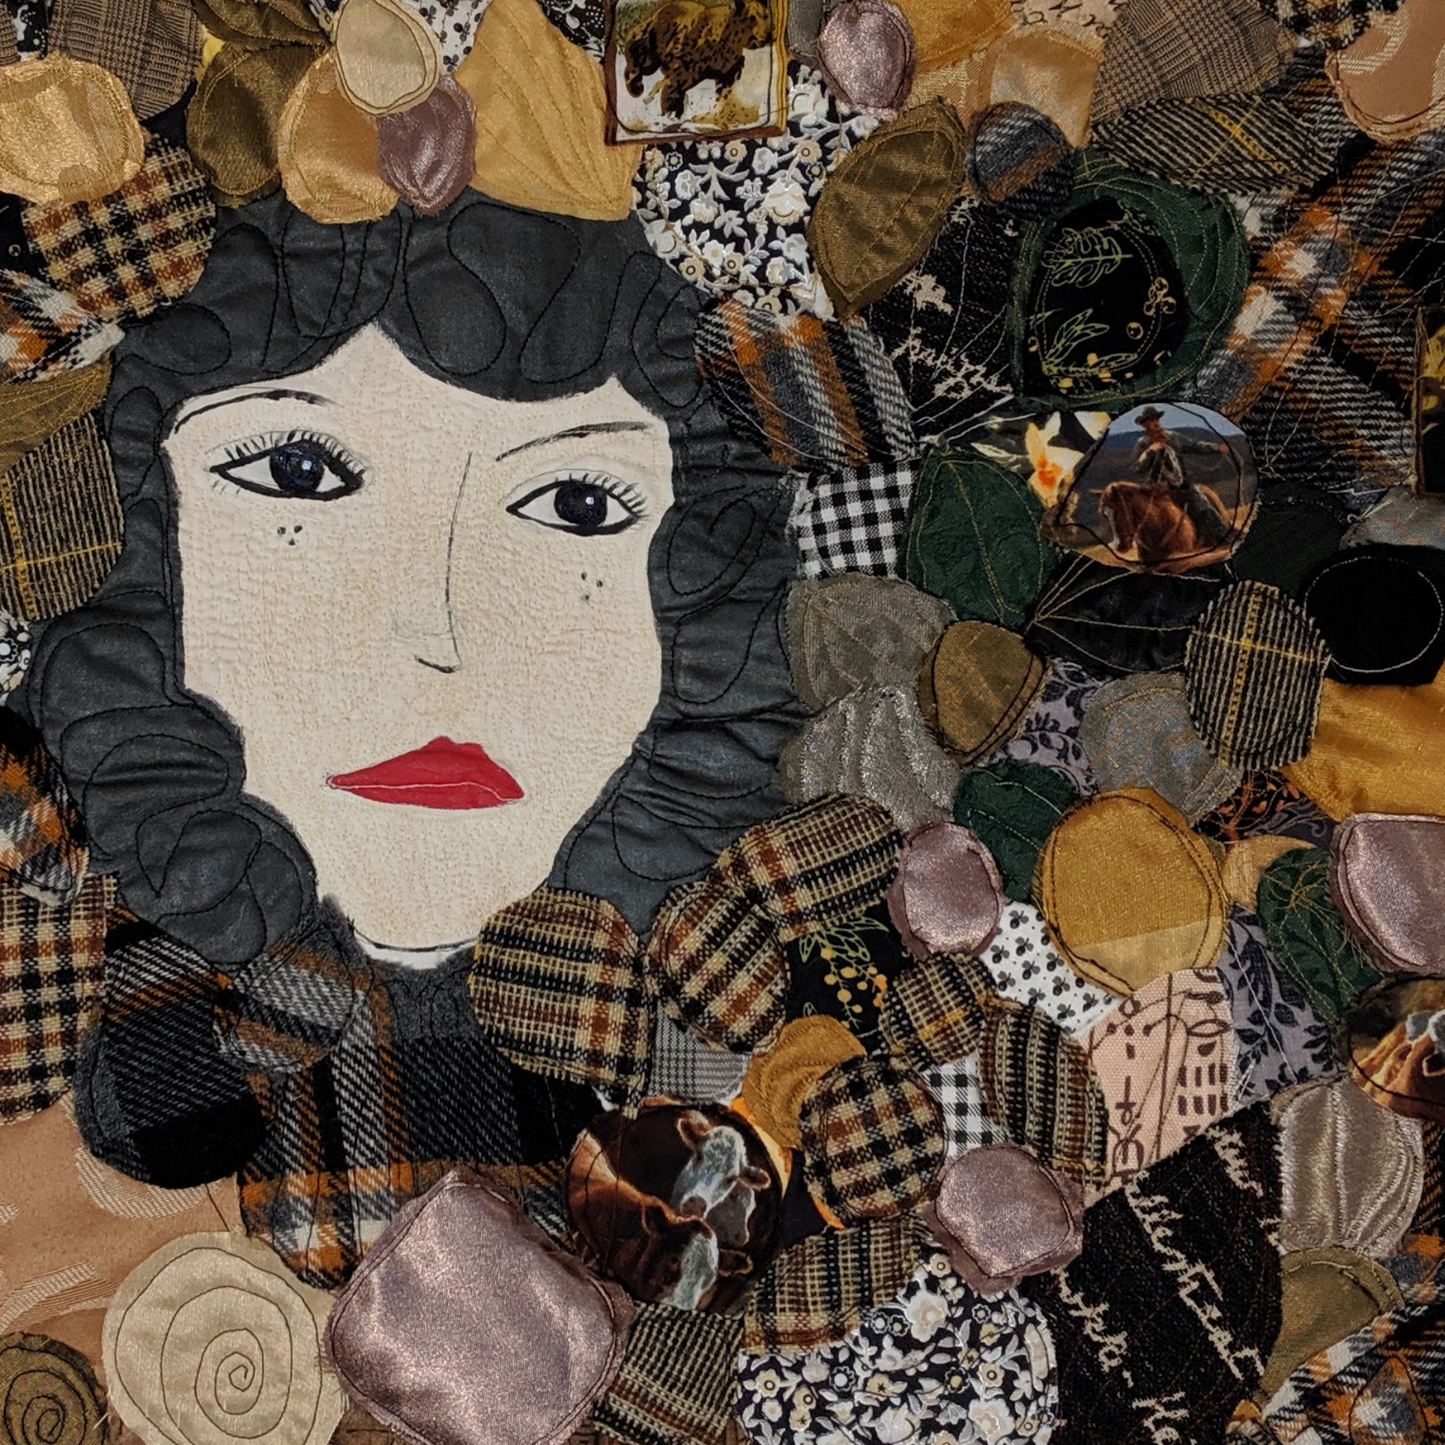 The Mothership: Diana Art Quilt (by Stitchteller)